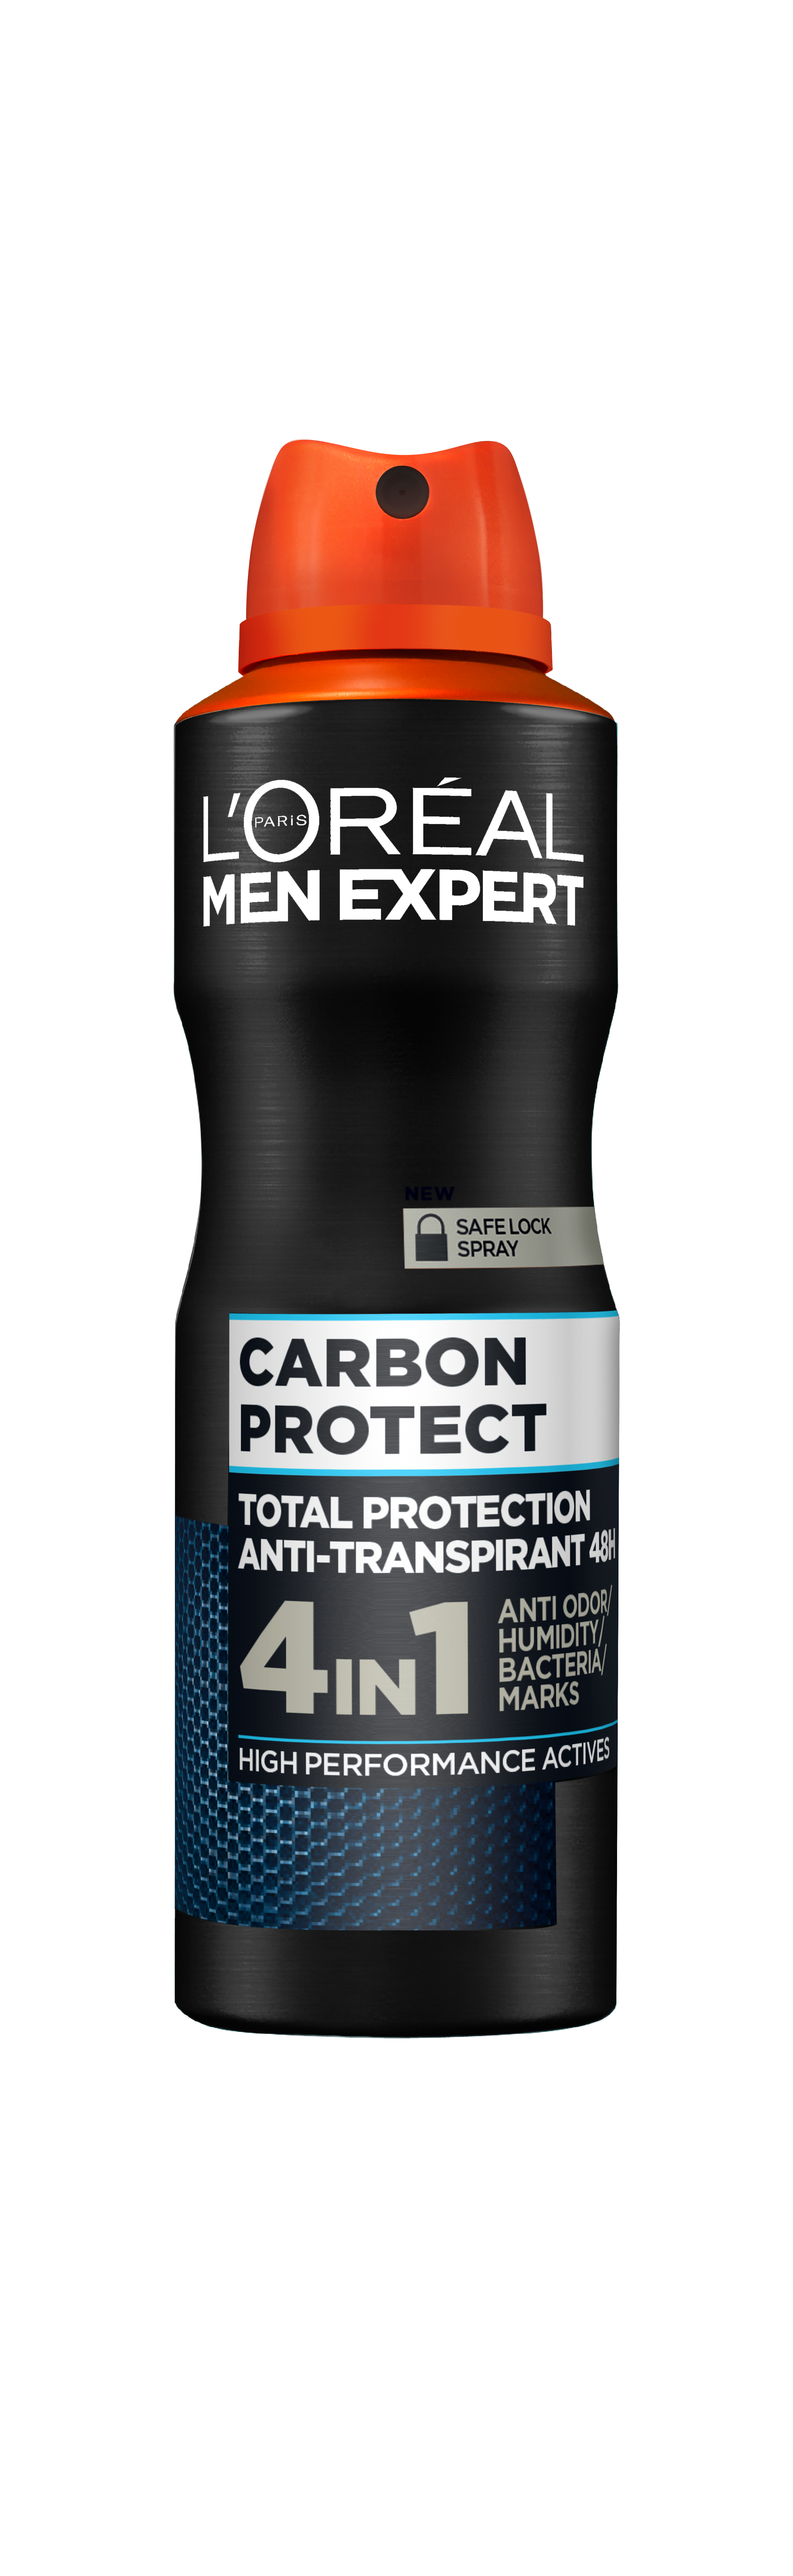 L'Oréal Men Expert Deodorant Men Expert Carbon Protect 4in1 - 150ml - Deodorant Spray